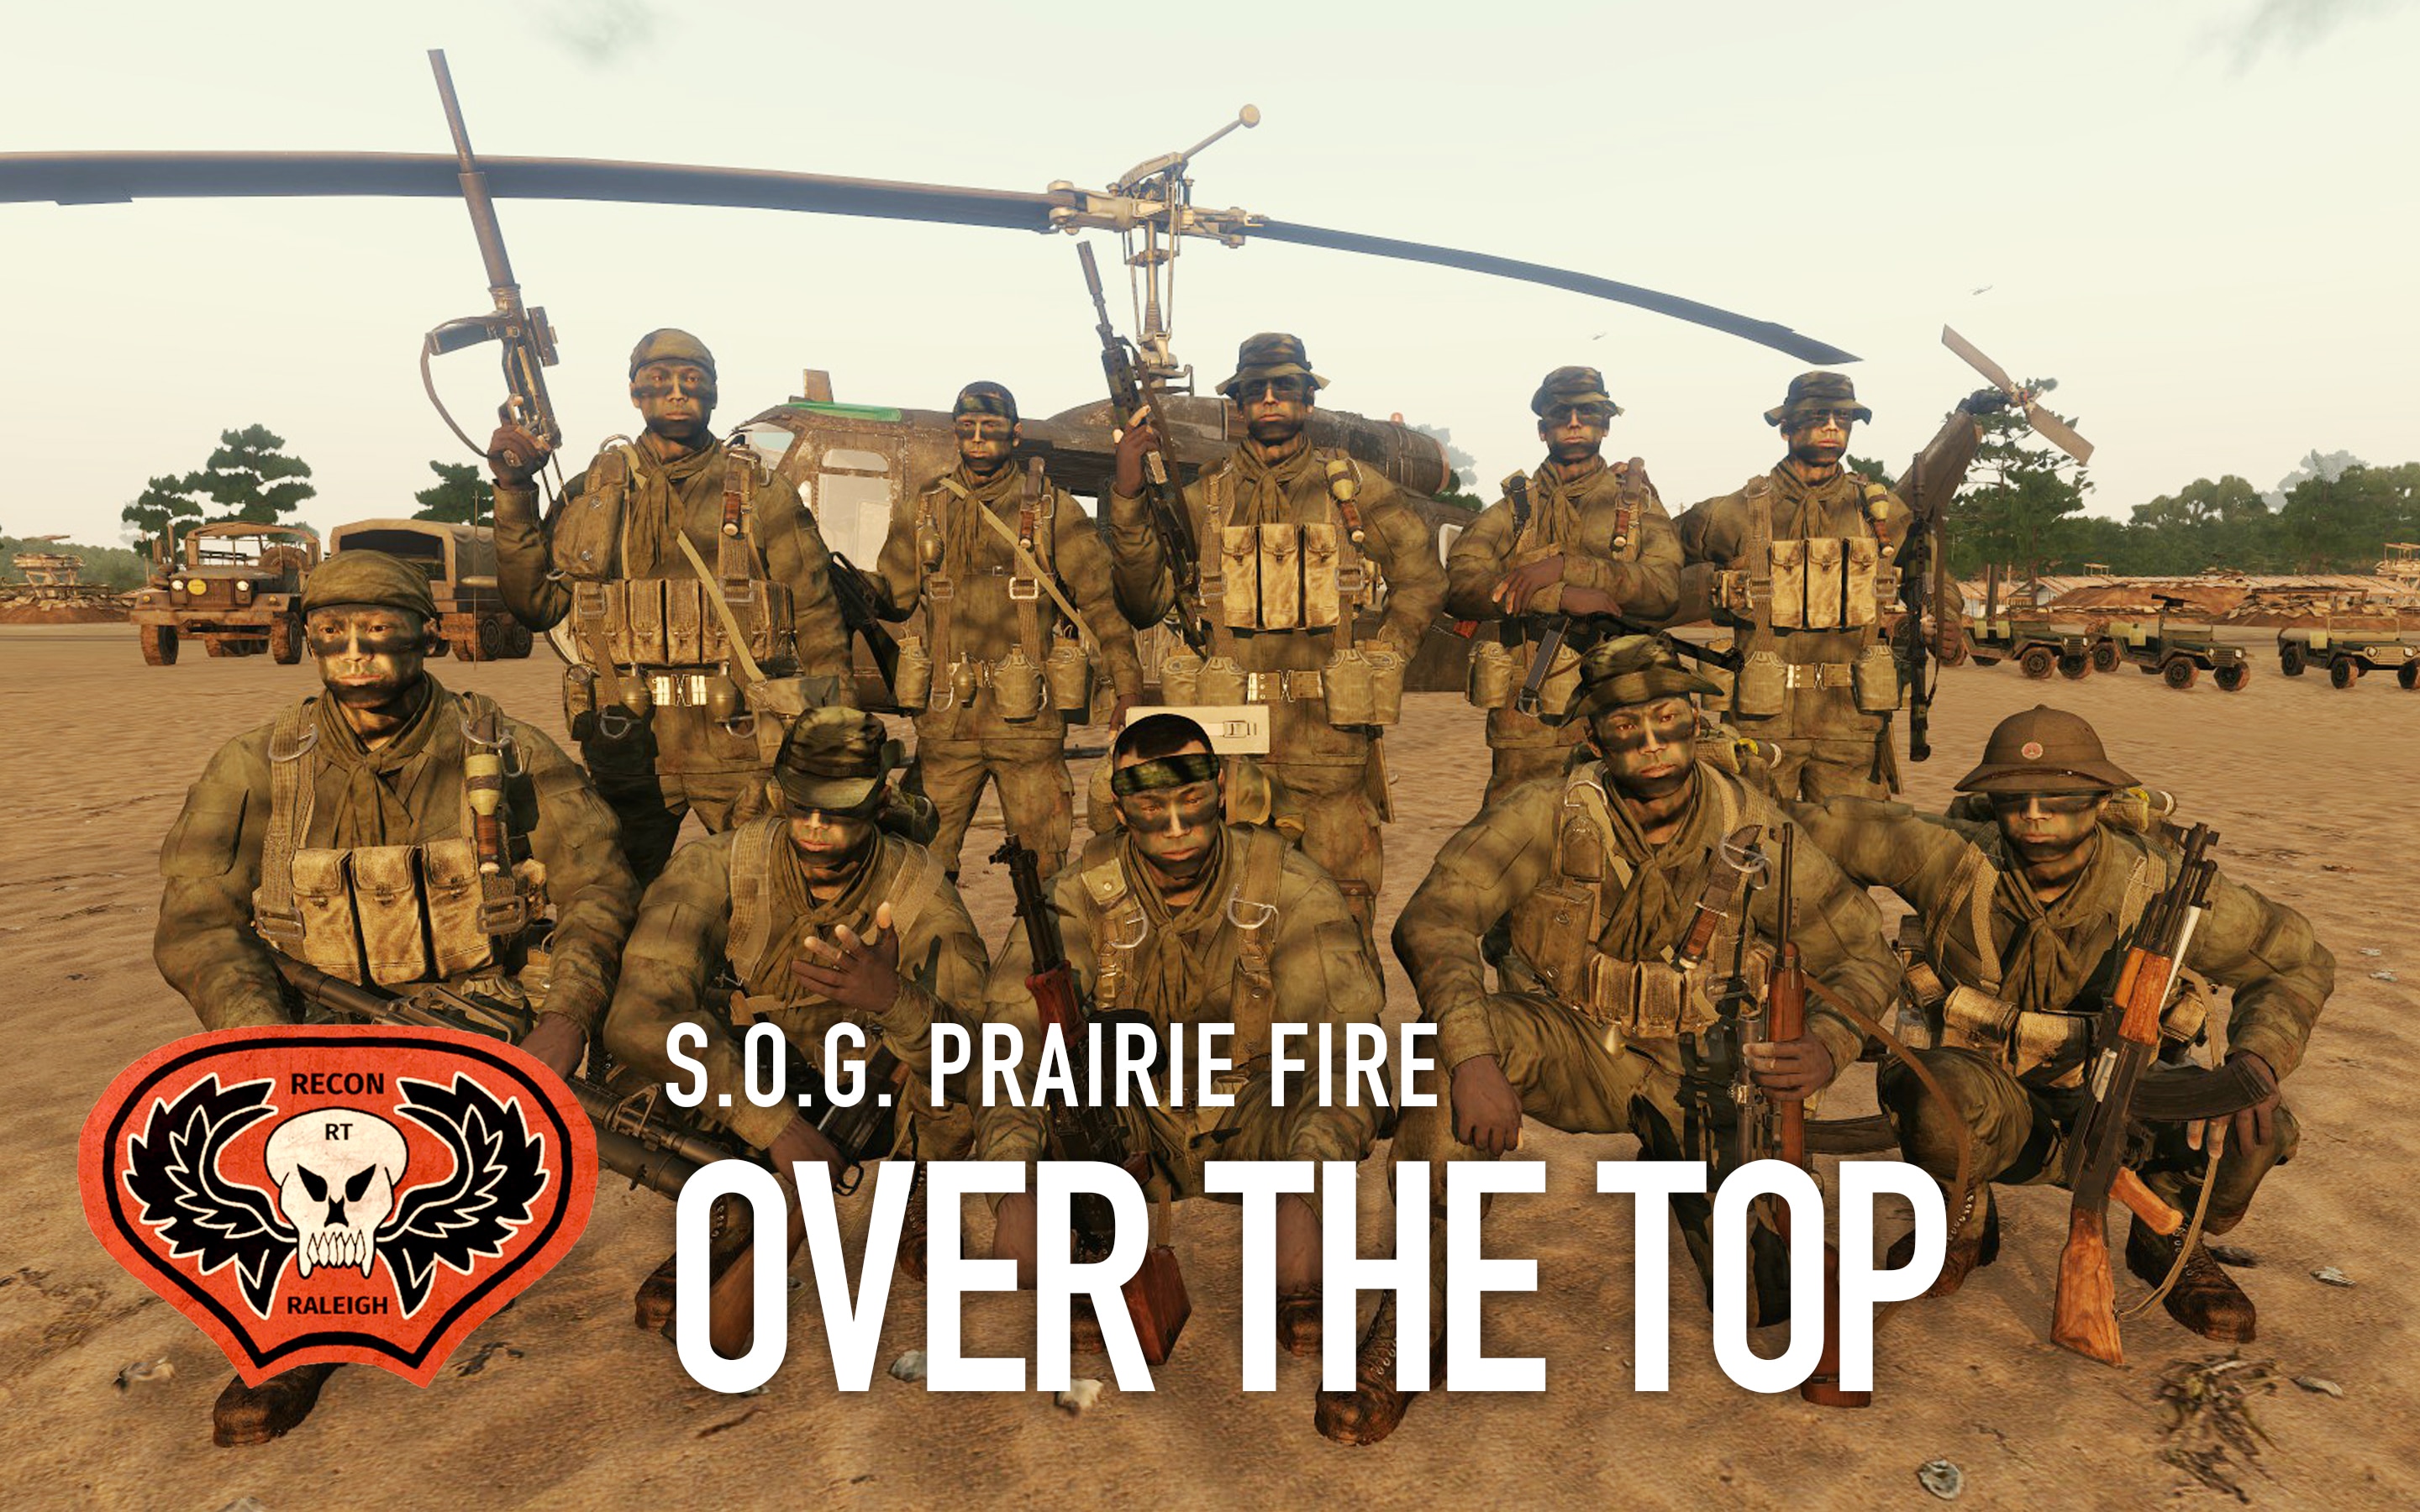 S.O.G. Prairie Fire Arma 3, RT Columbia